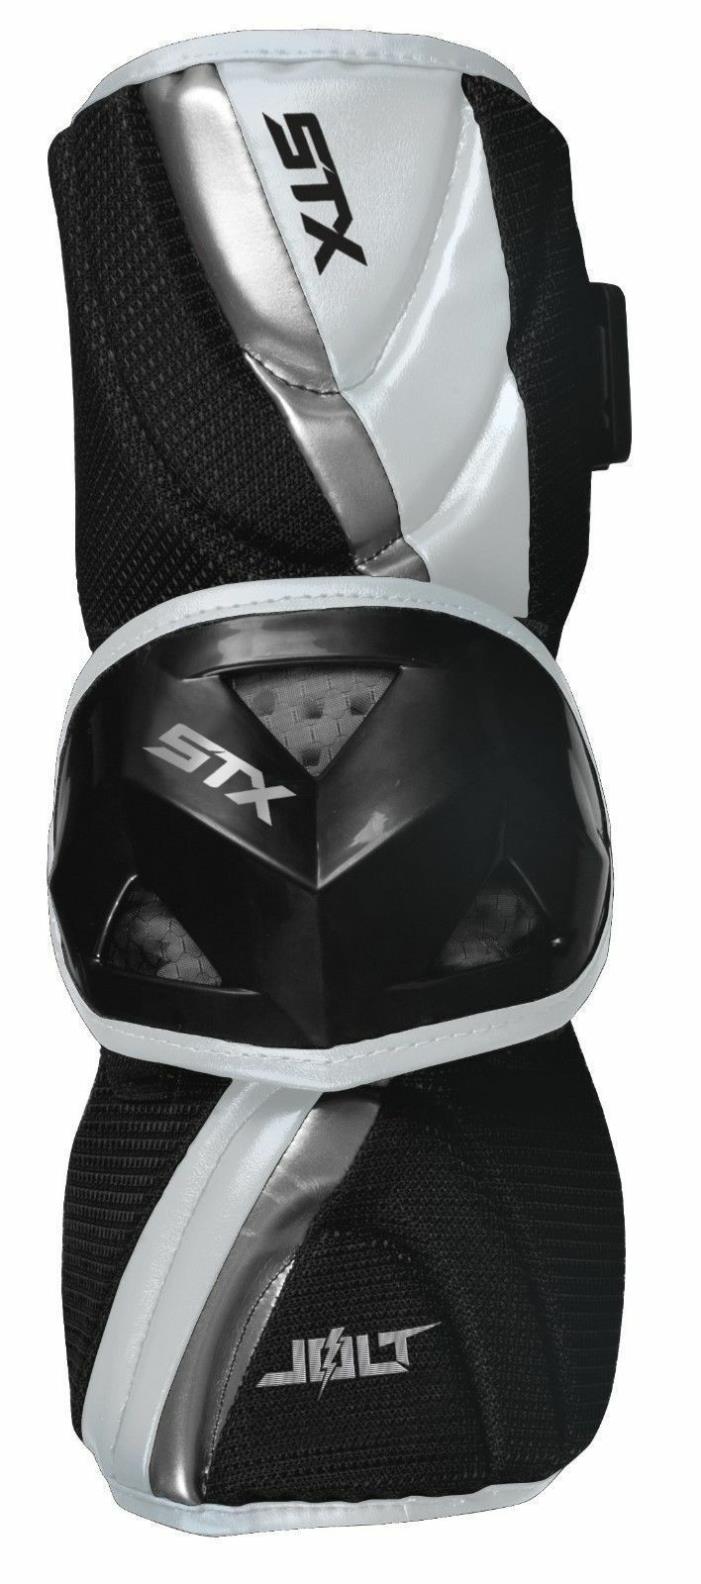 STX Jolt Lacrosse Arm Guards - Black/White/Silver - Youth Size L - NEW